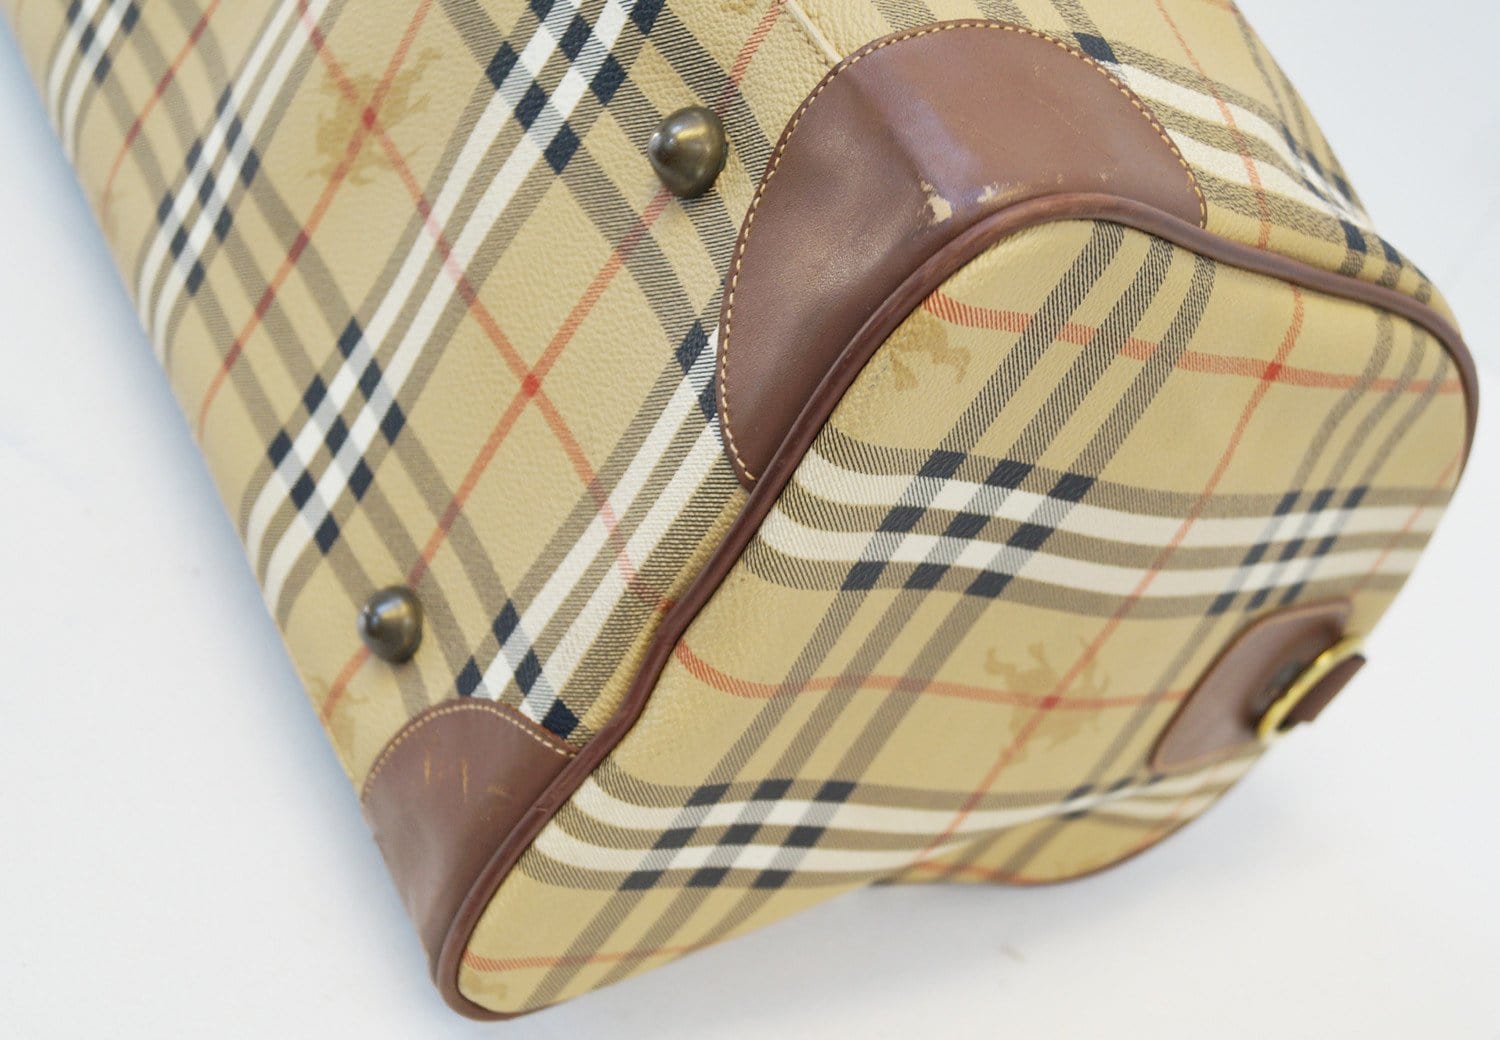 Authentic Burberry Nova Check Leather Travel Bag – Vanilla Vintage